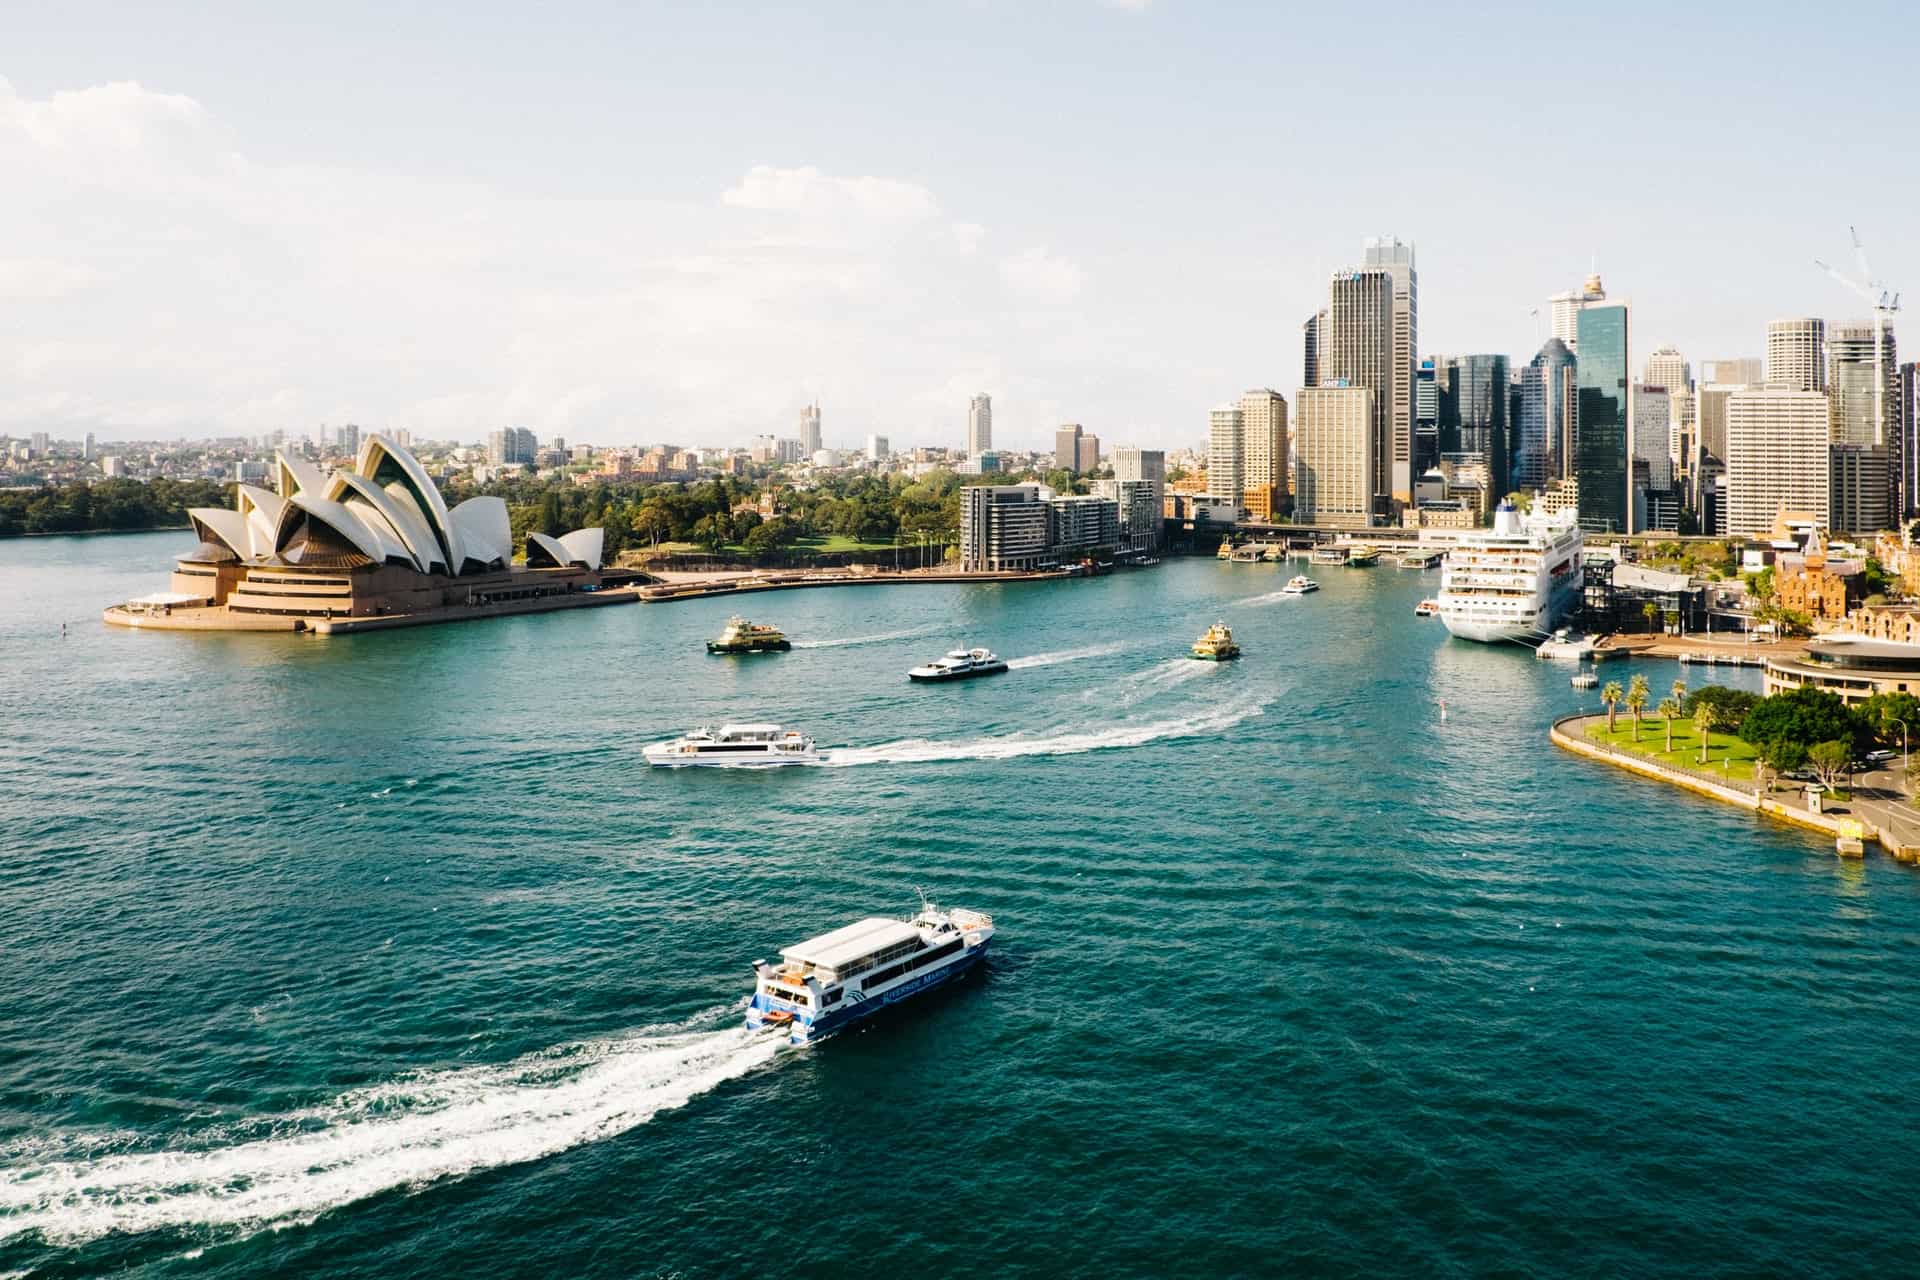 Best things to do in Sydney Australia - Jennifer McDermott - Sydney Harbour and Opera House by Dan Freeman on Unsplash